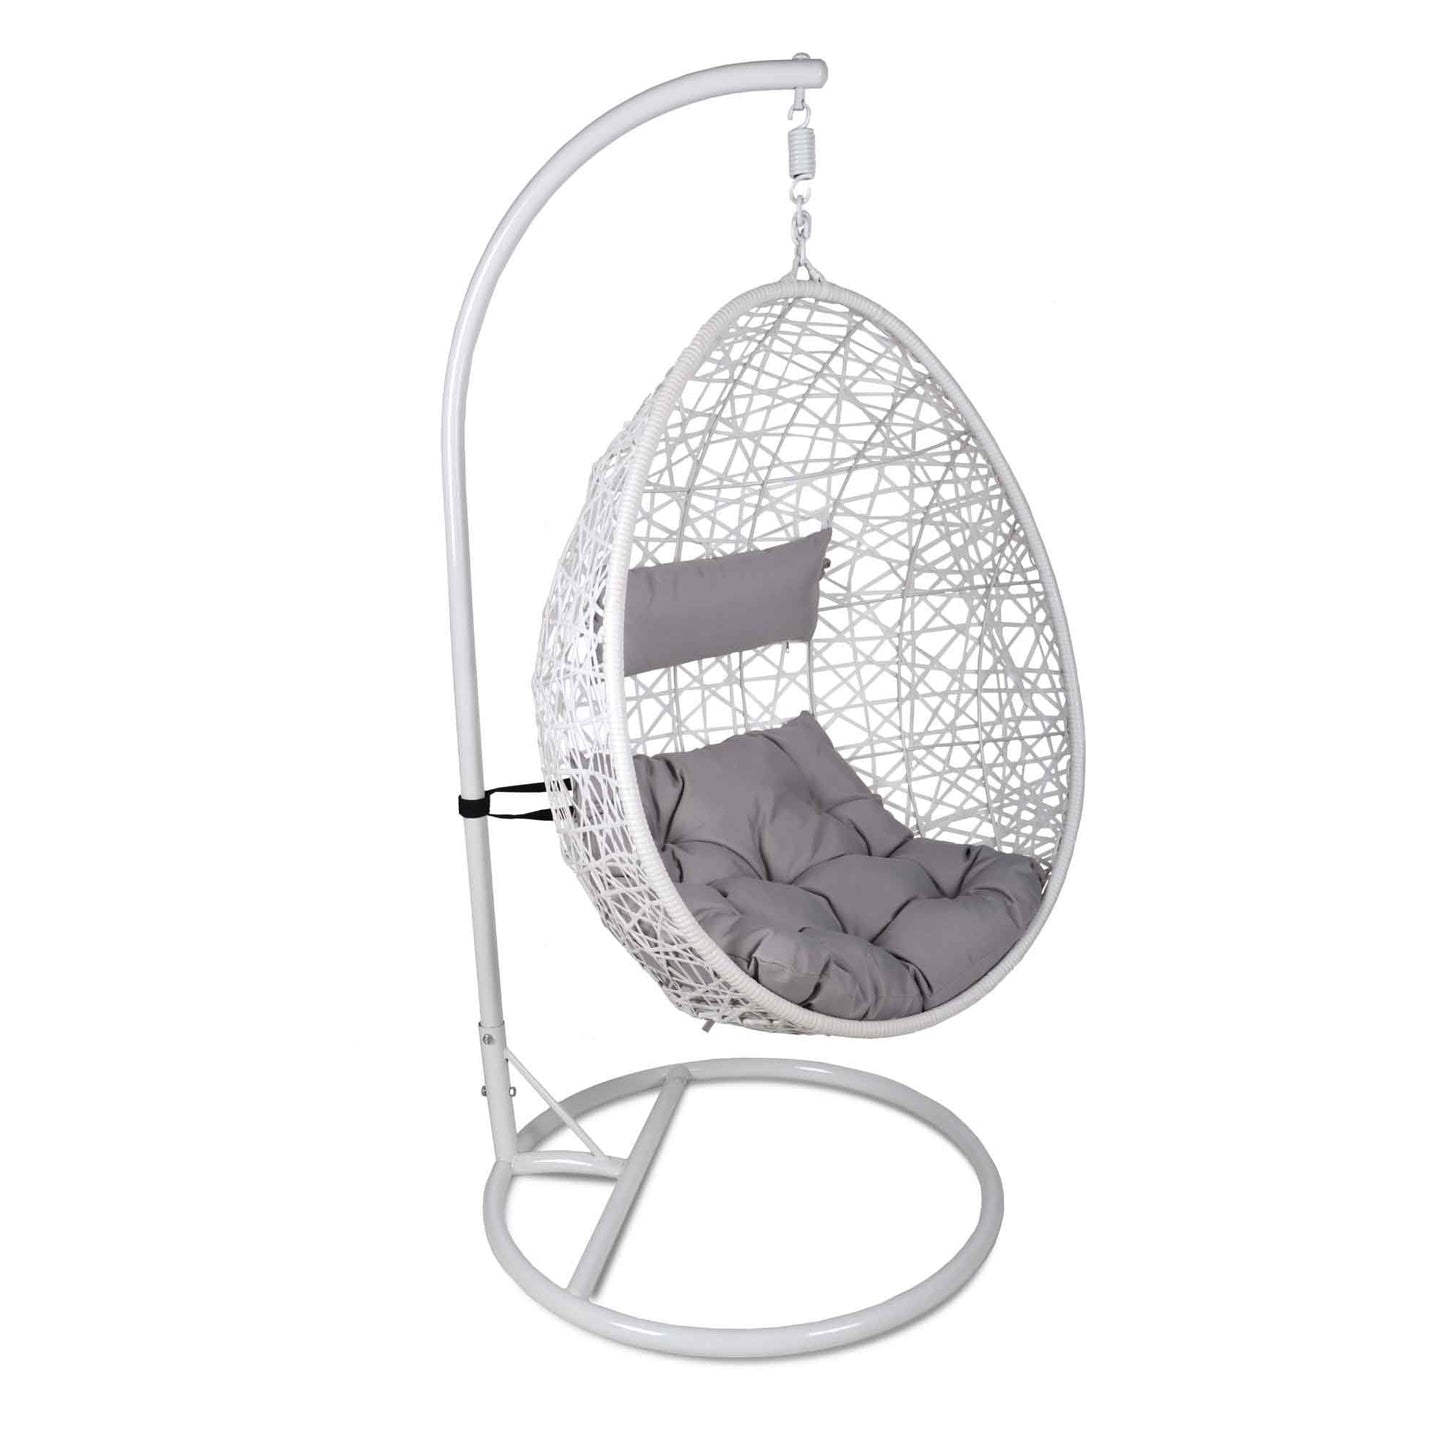 Rattan Hanging Egg Swing Chair - Rattan Garden Furniture - Garden Furniture, Outdoor Cushions, Hanging Basket, Egg Chair, Garden Accessories, Garden Swing Seat (Single, Black)